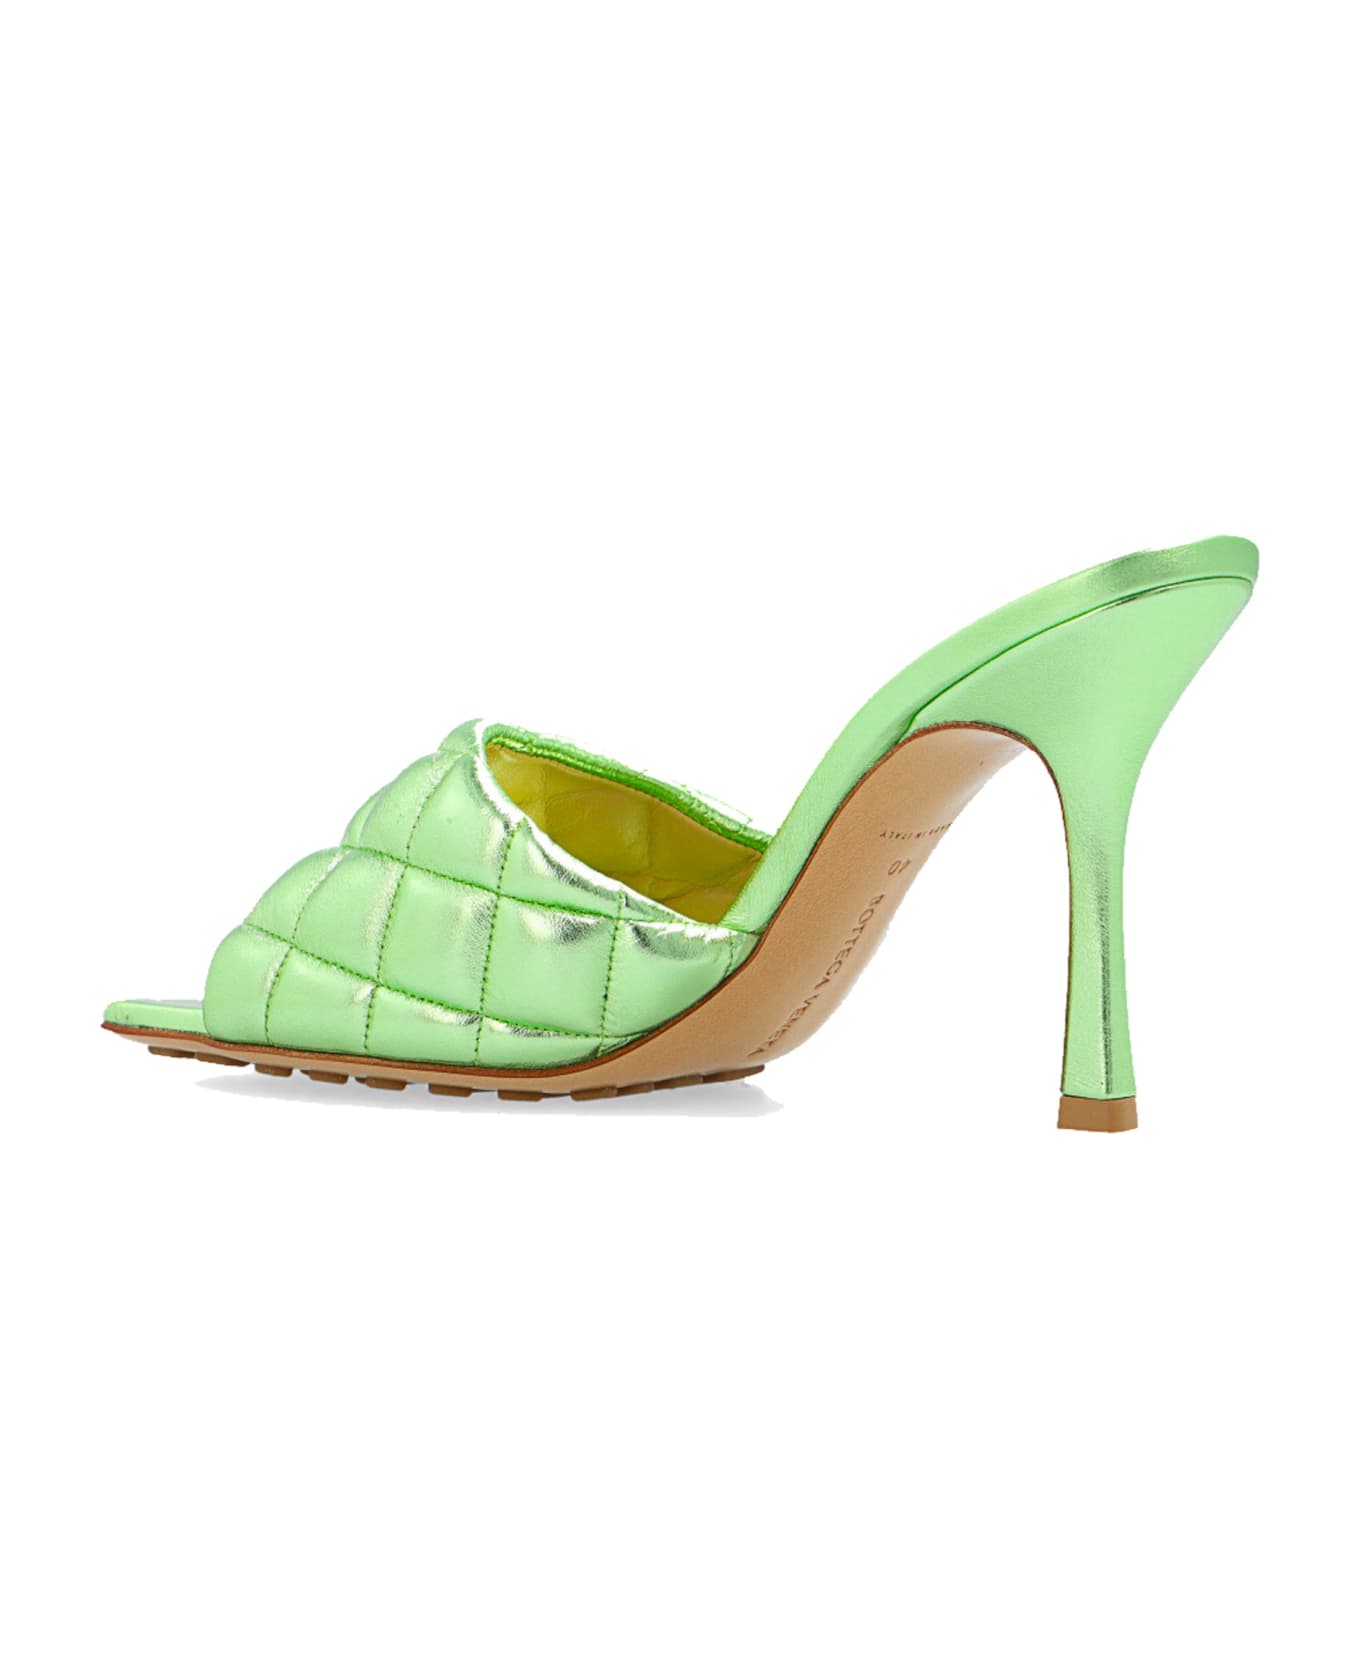 Bottega Veneta Padded Sandals - Green サンダル